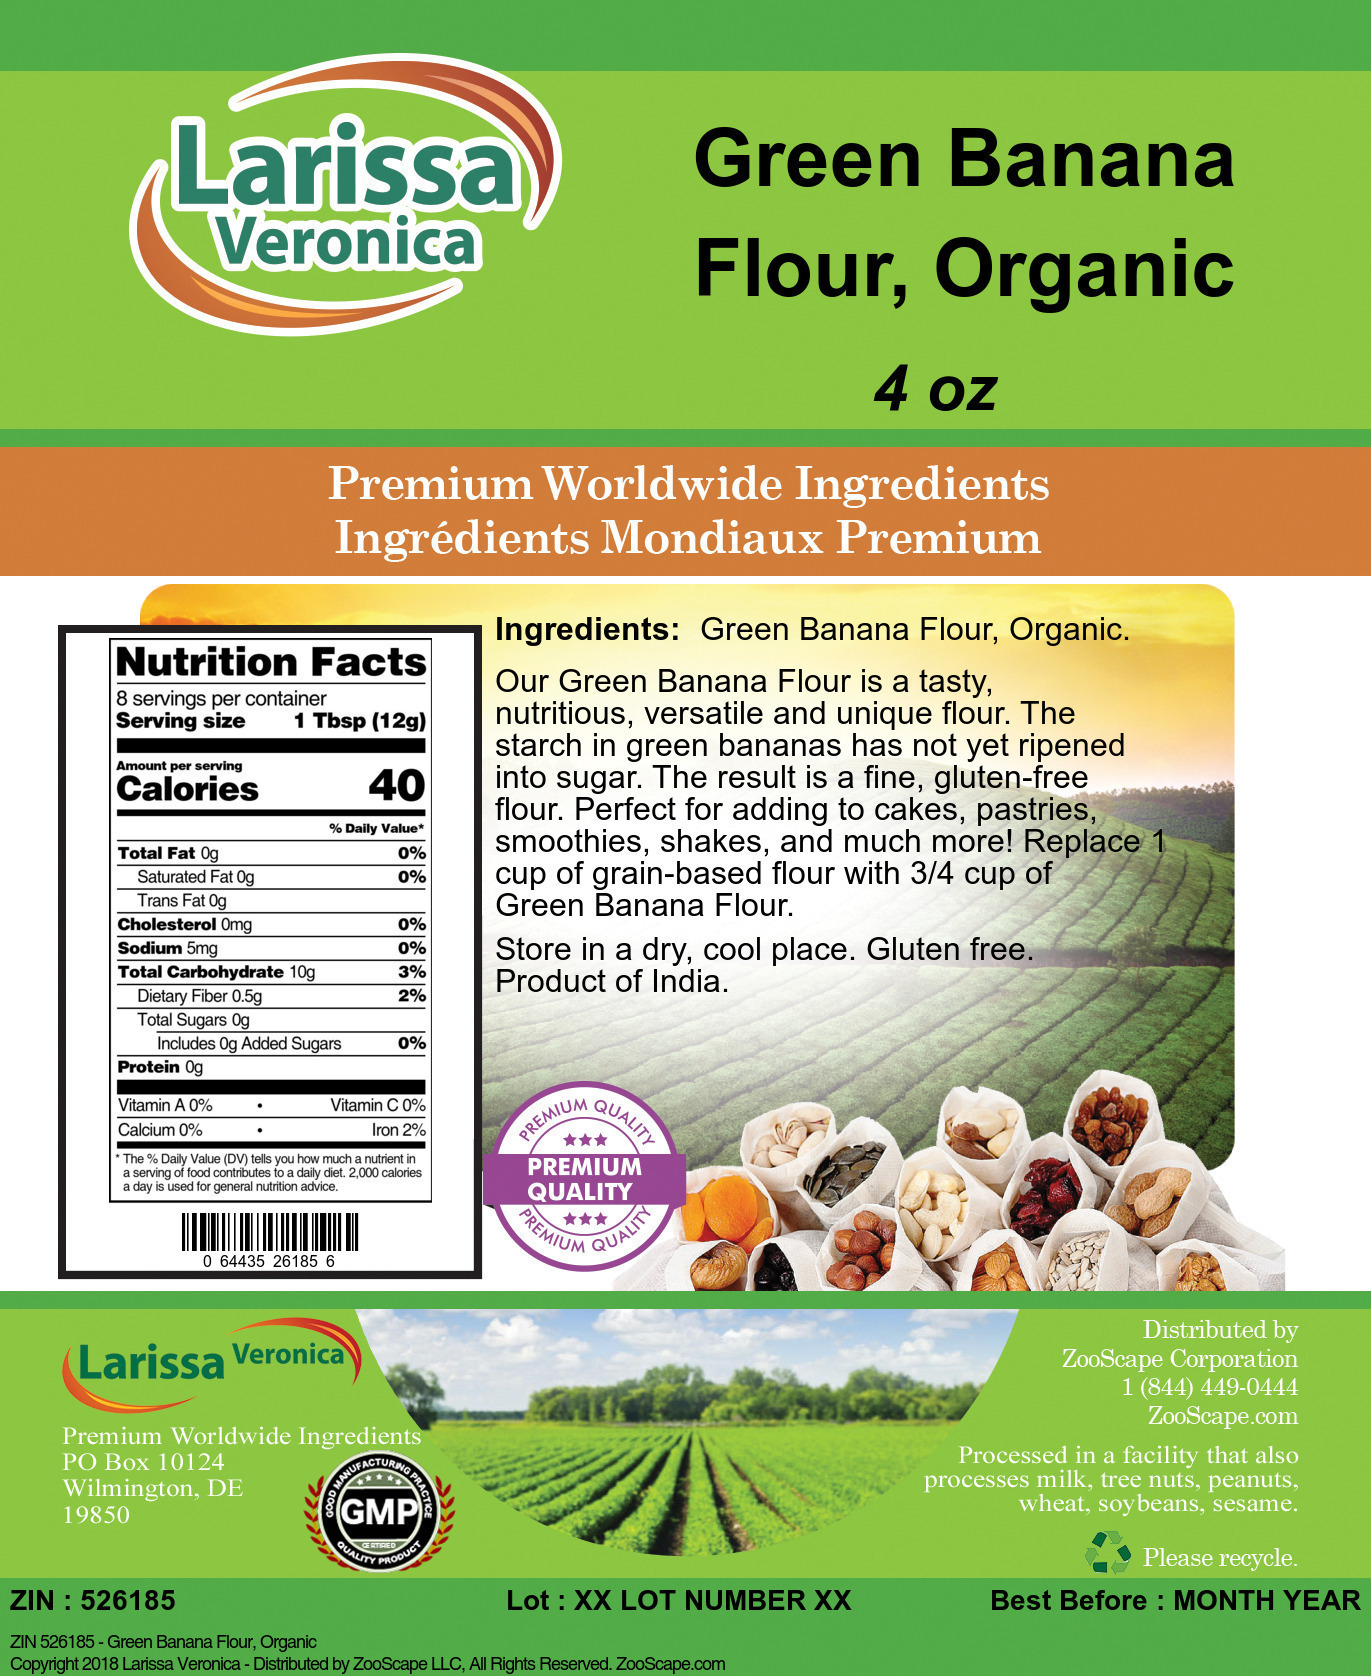 Green Banana Flour, Organic - Label